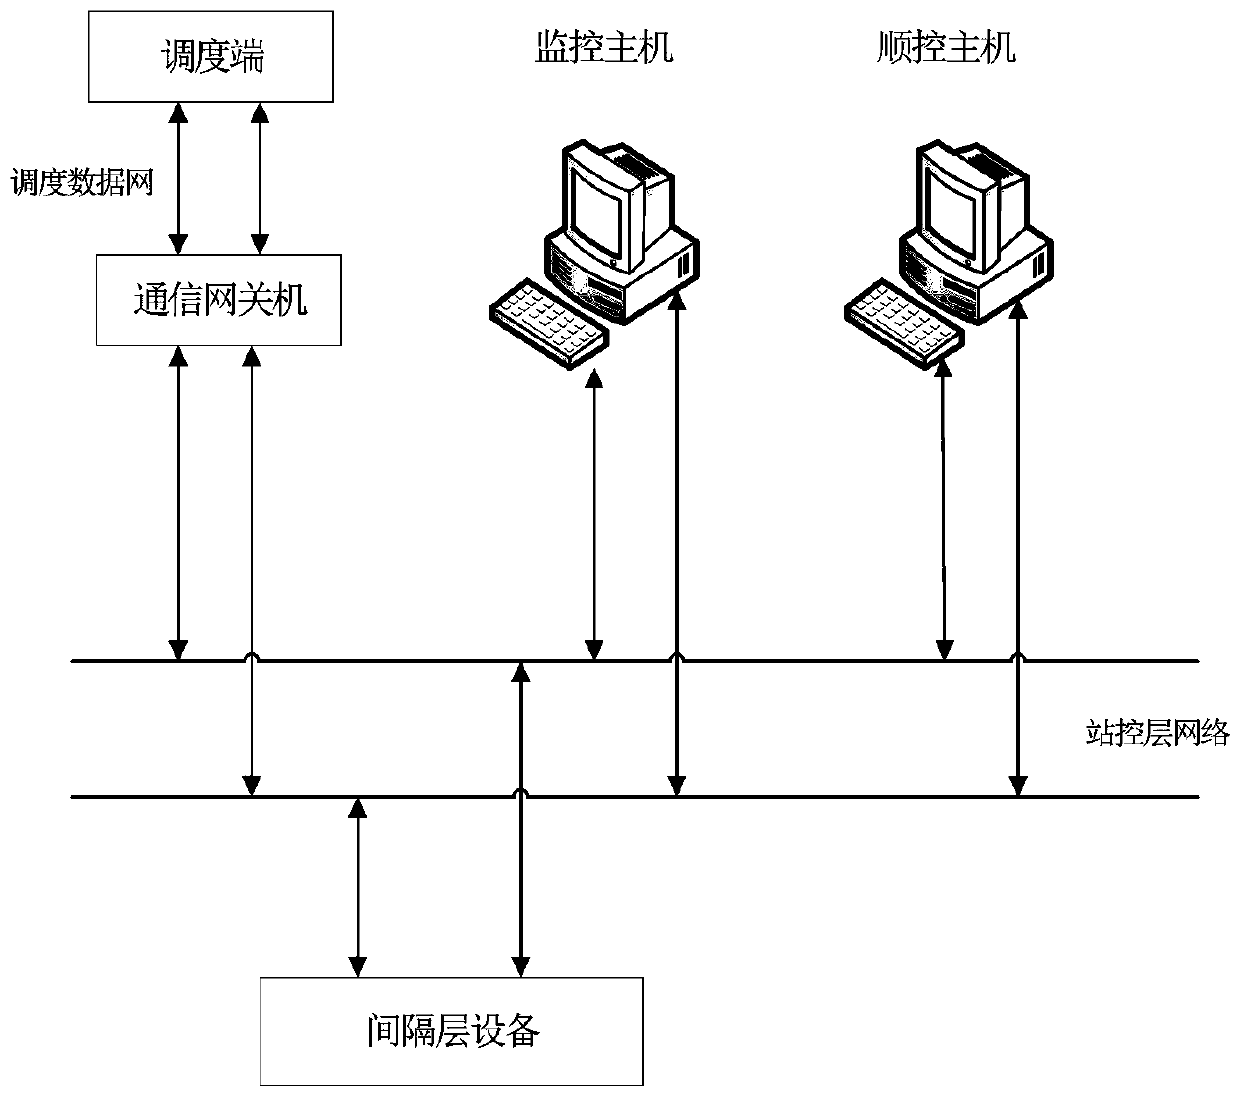 Intelligent inspection system and method for secondary equipment of 500kV transformer substation